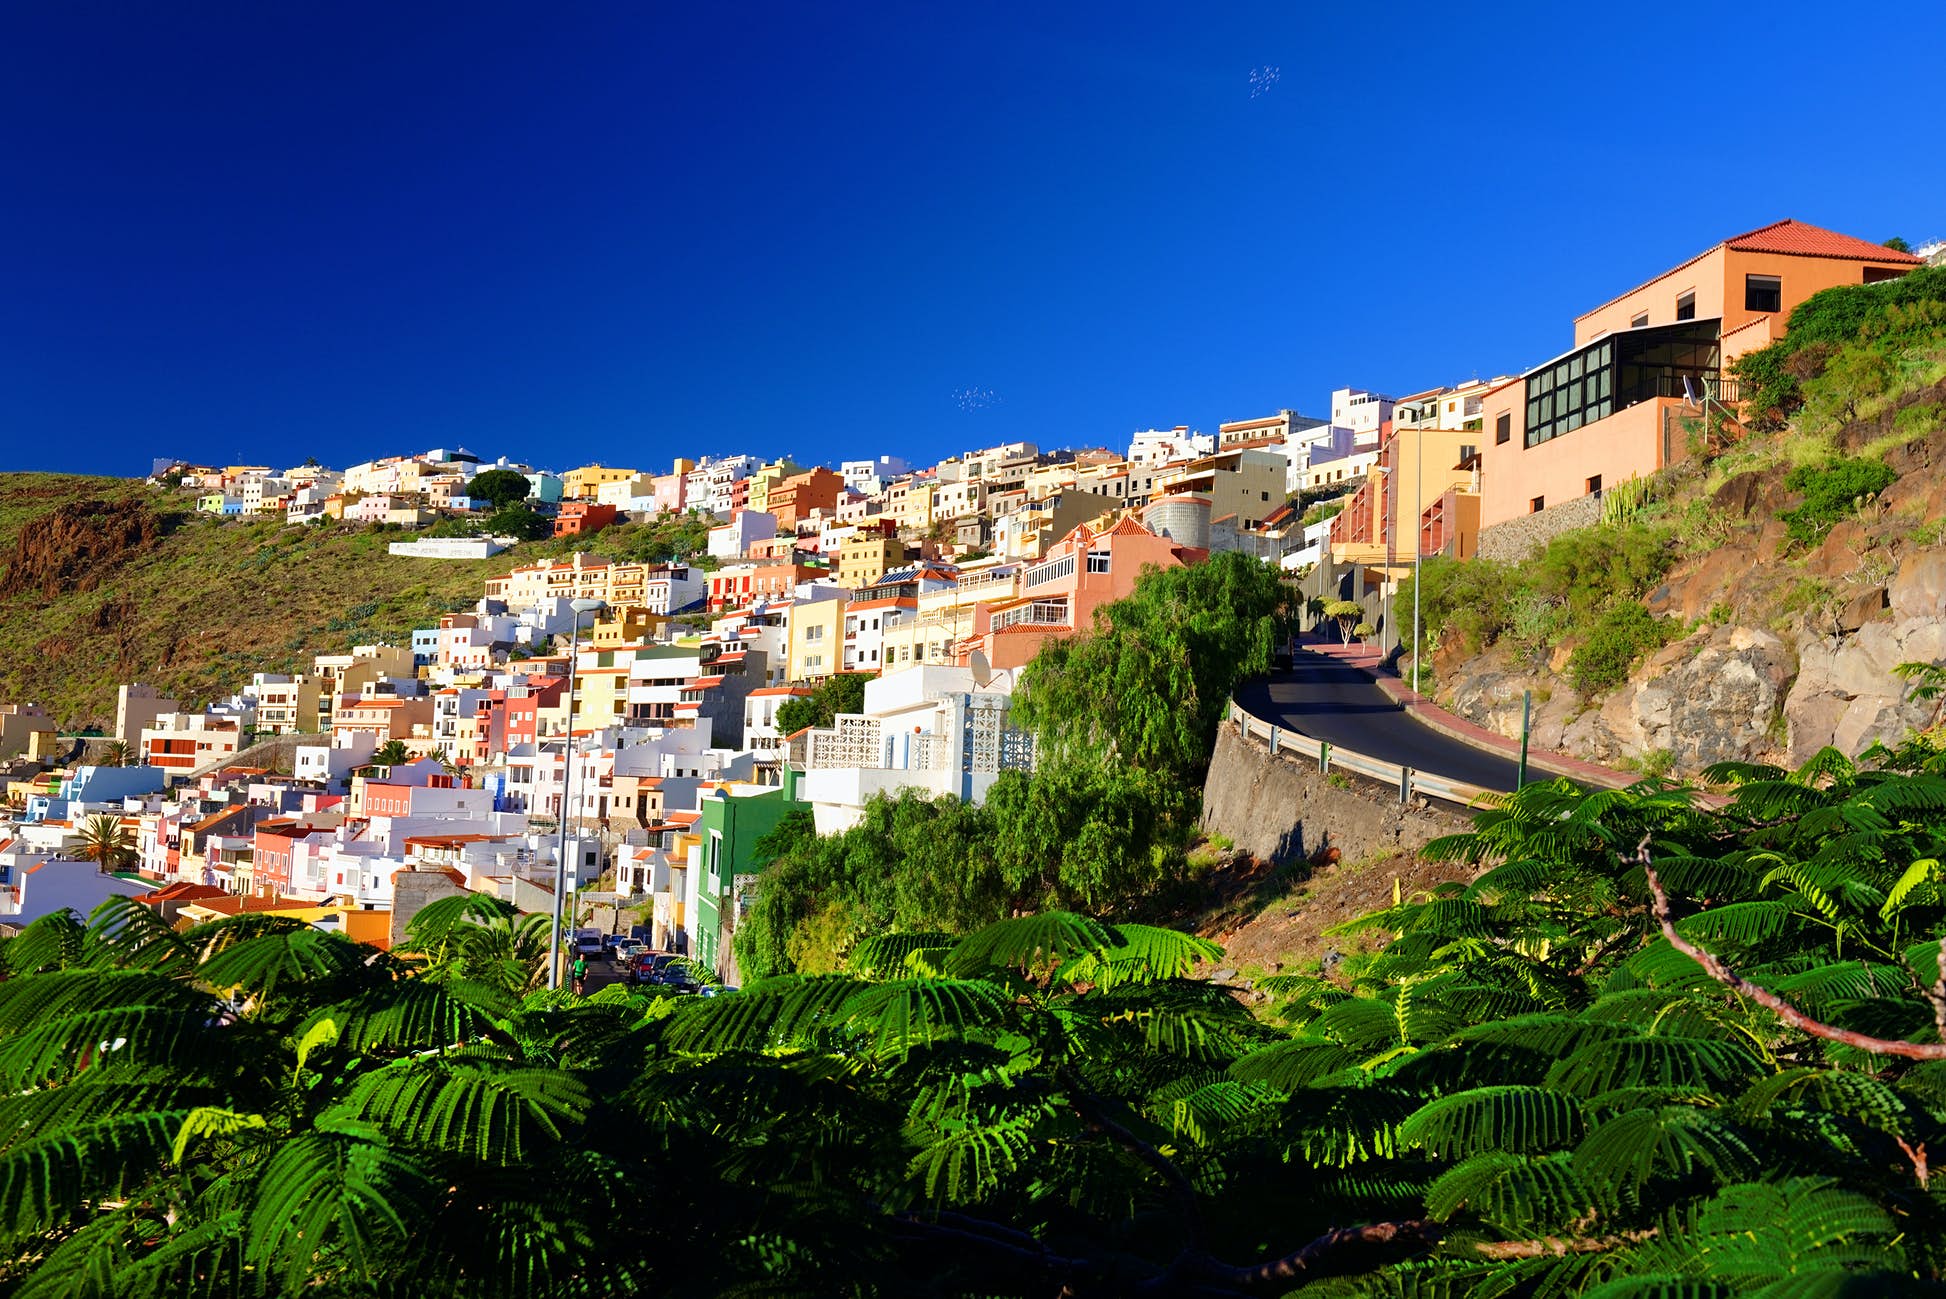 San Sebastian de la Gomera, Canary Islands ©Mikadun/Shutterstock